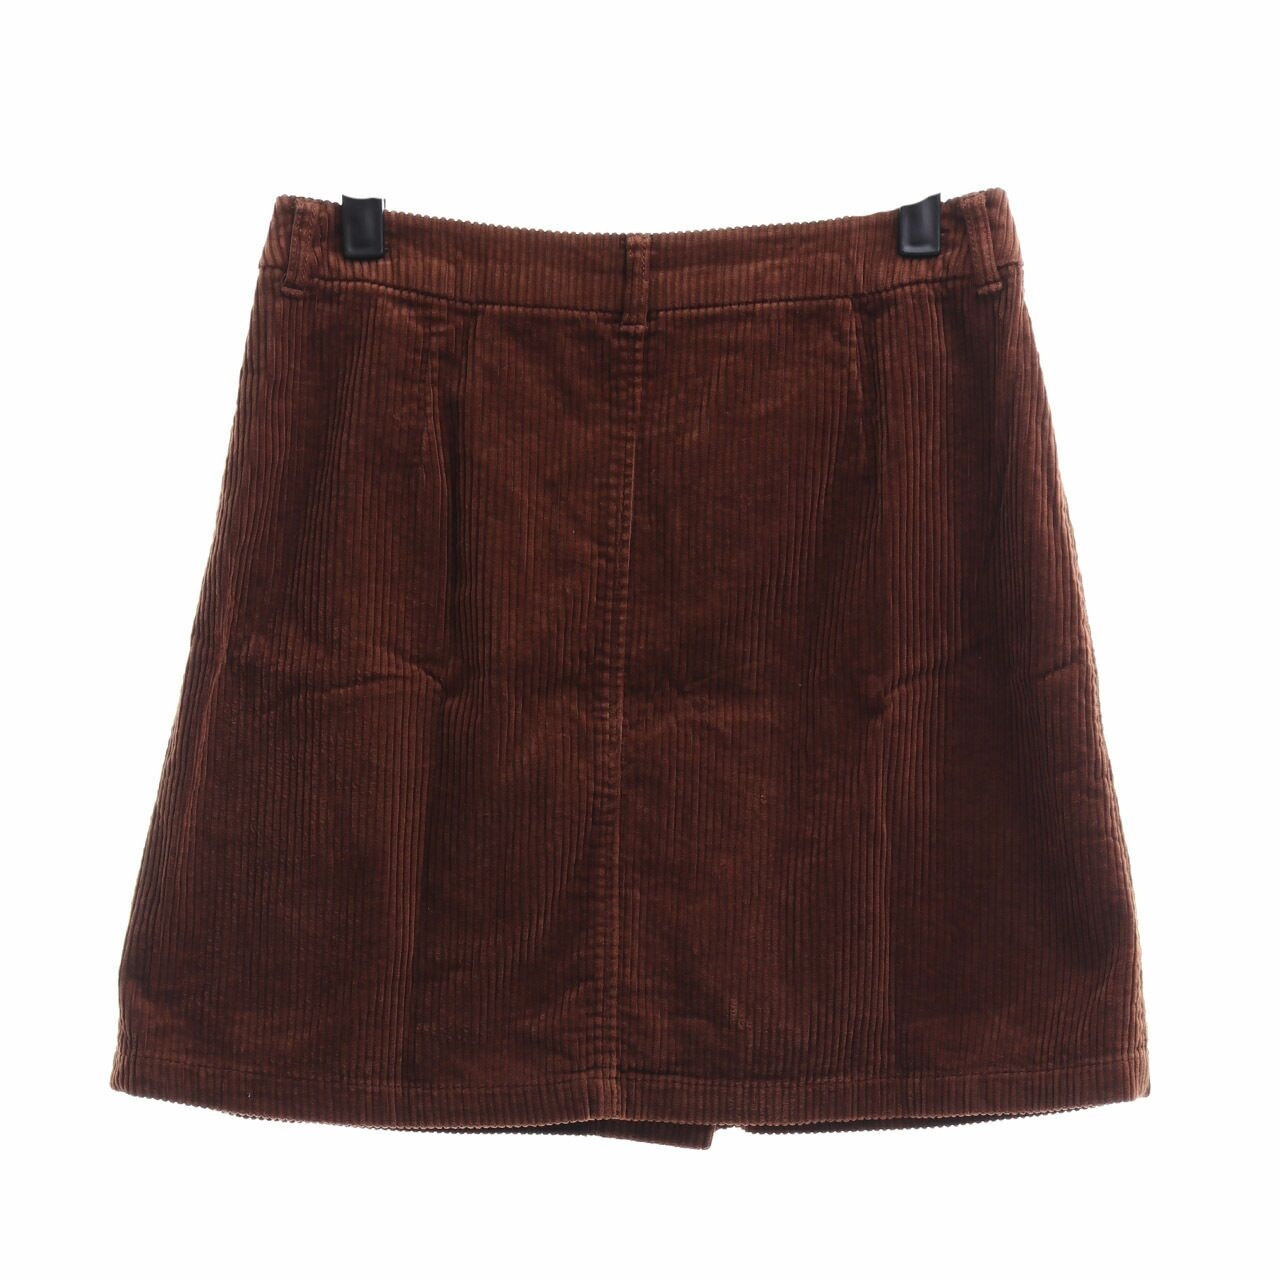 Lowrys Farm Brown Corduroy Mini Skirt